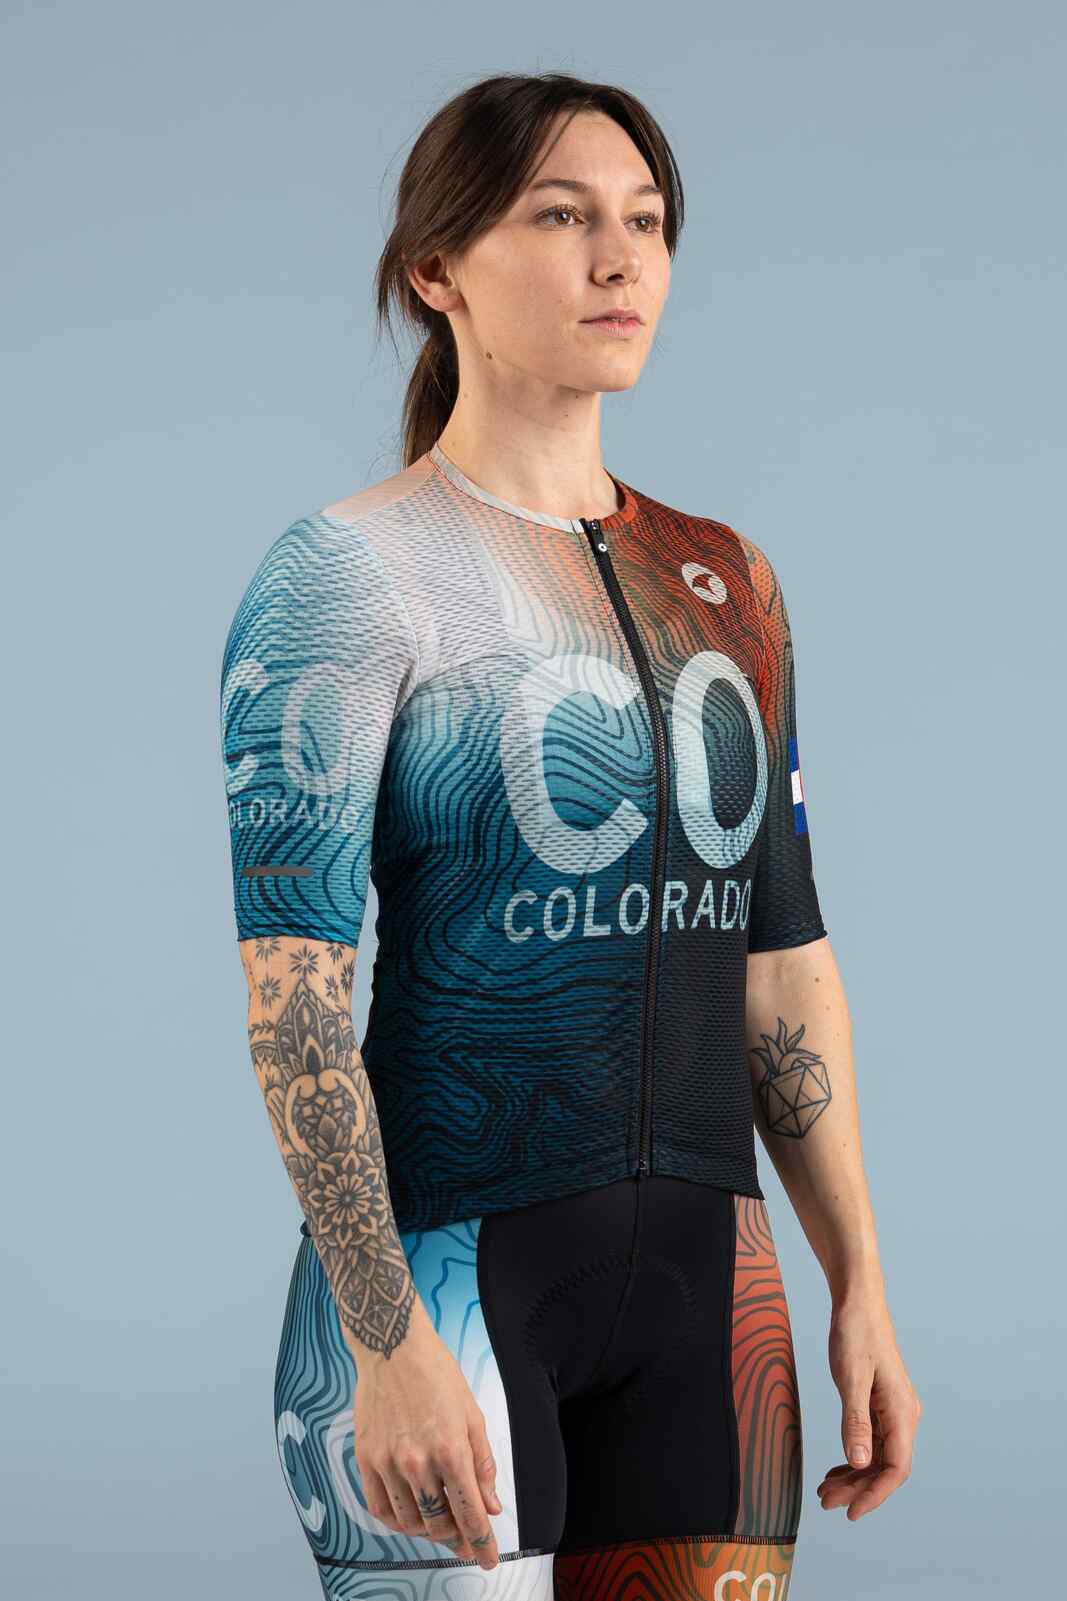 Women's Colorado Geo Mesh Cycling Jersey - Front View